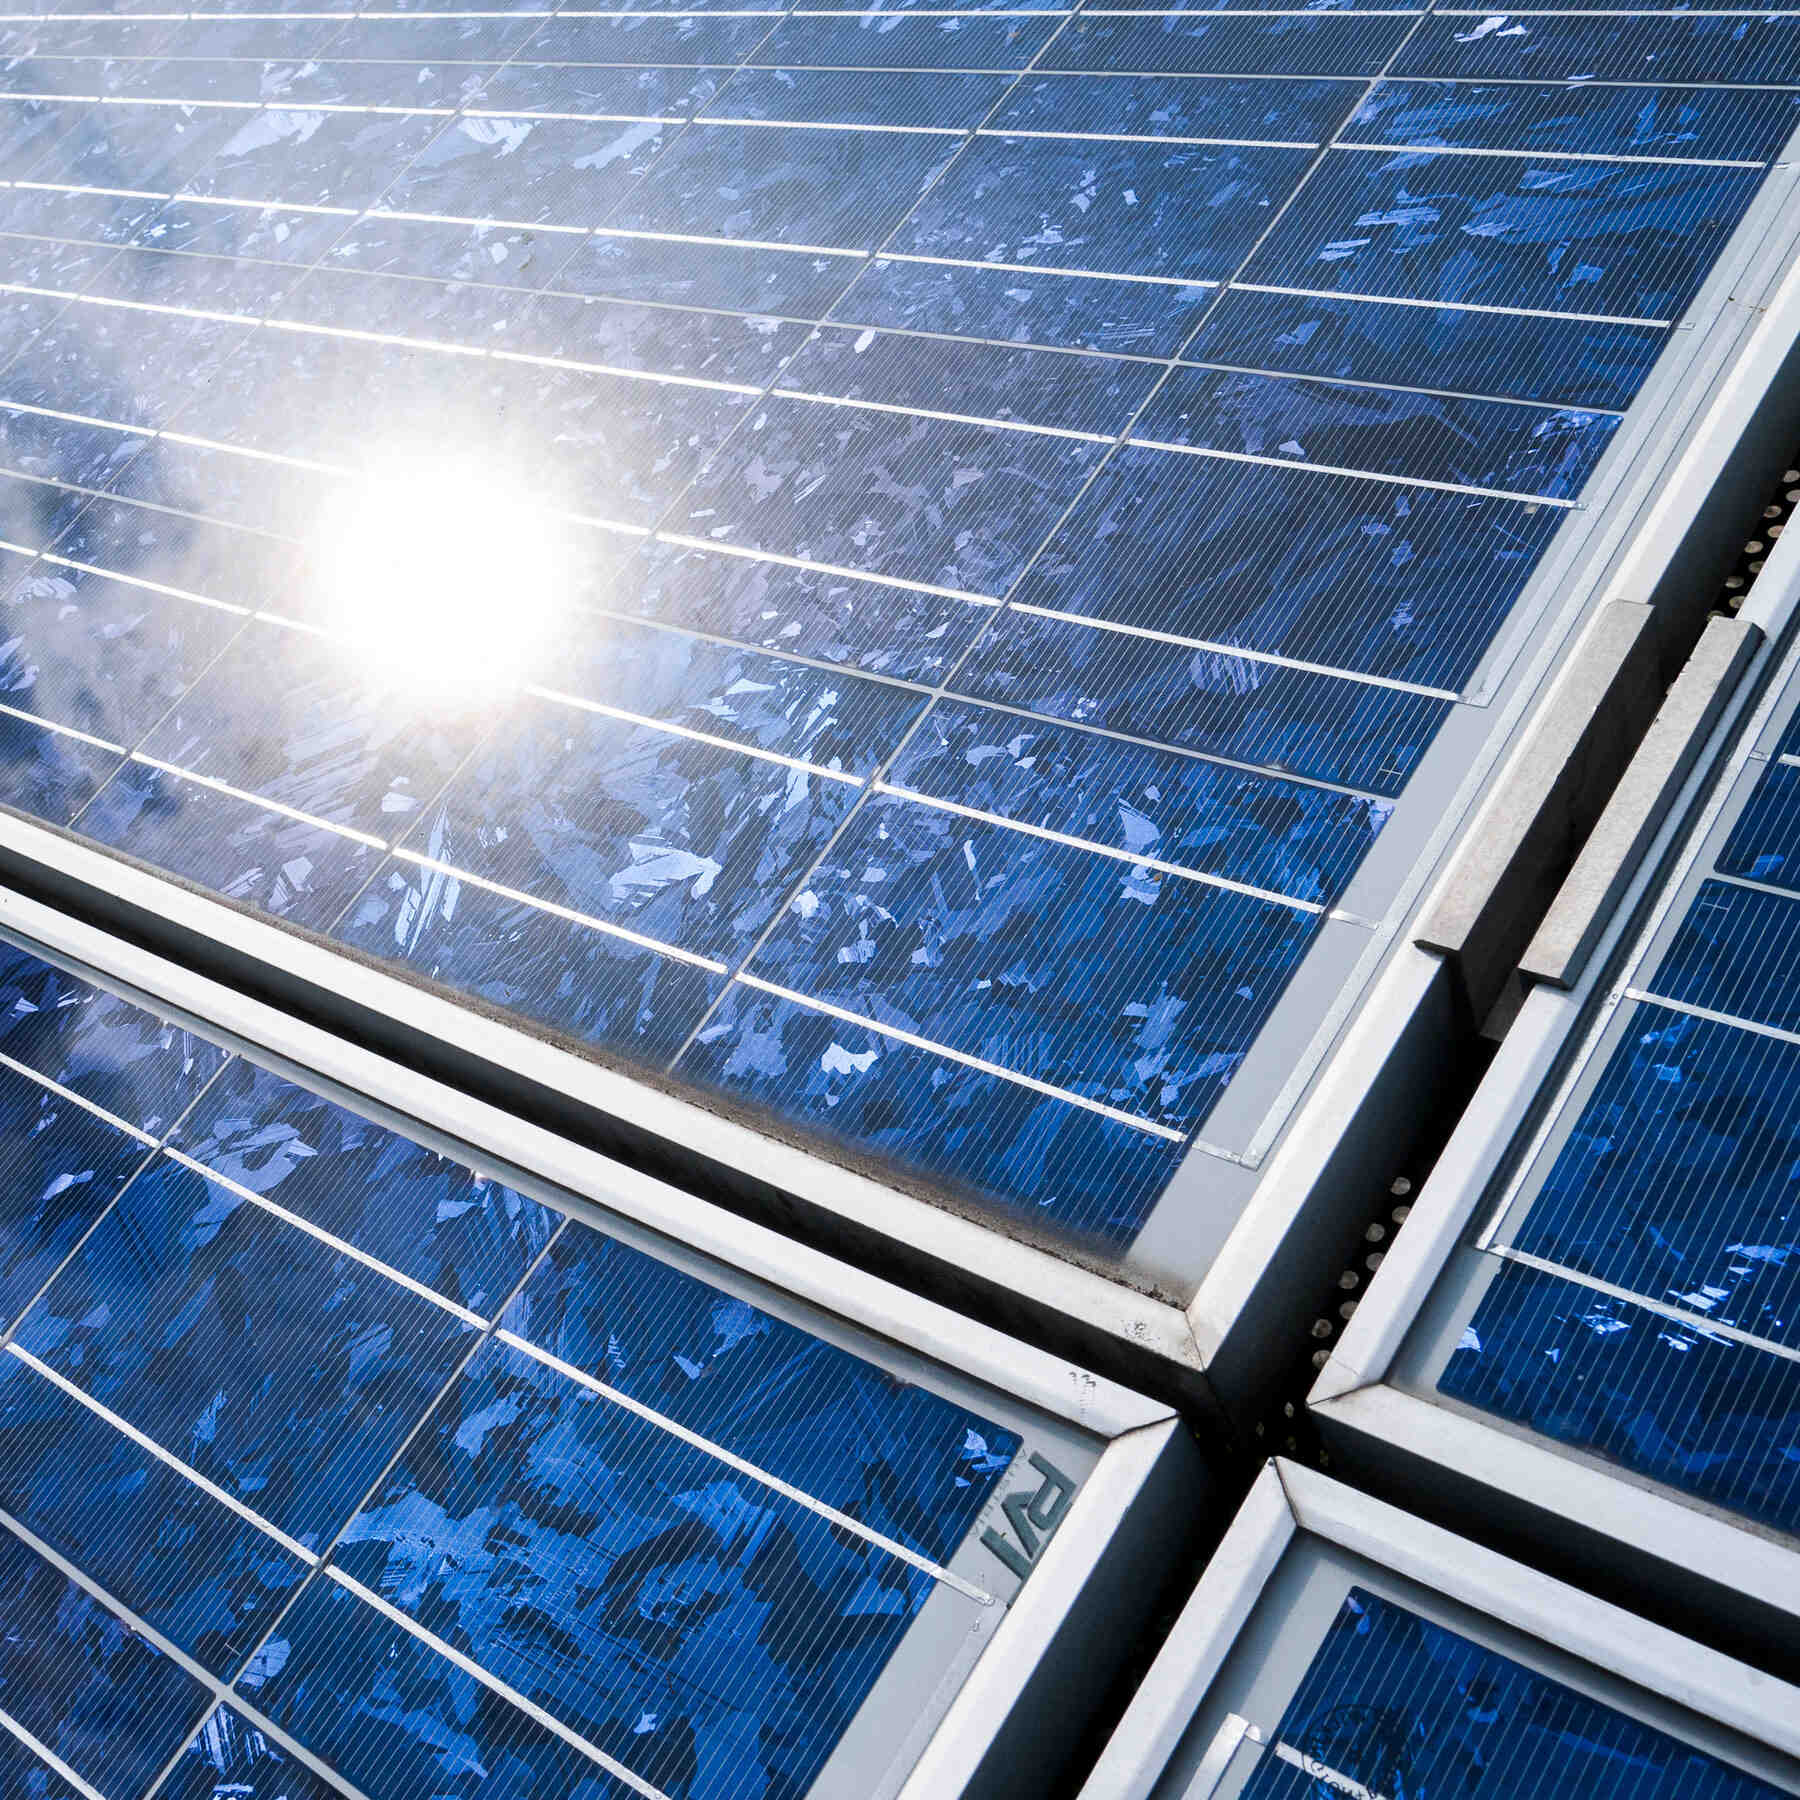 Can solar energy satisfy global needs?